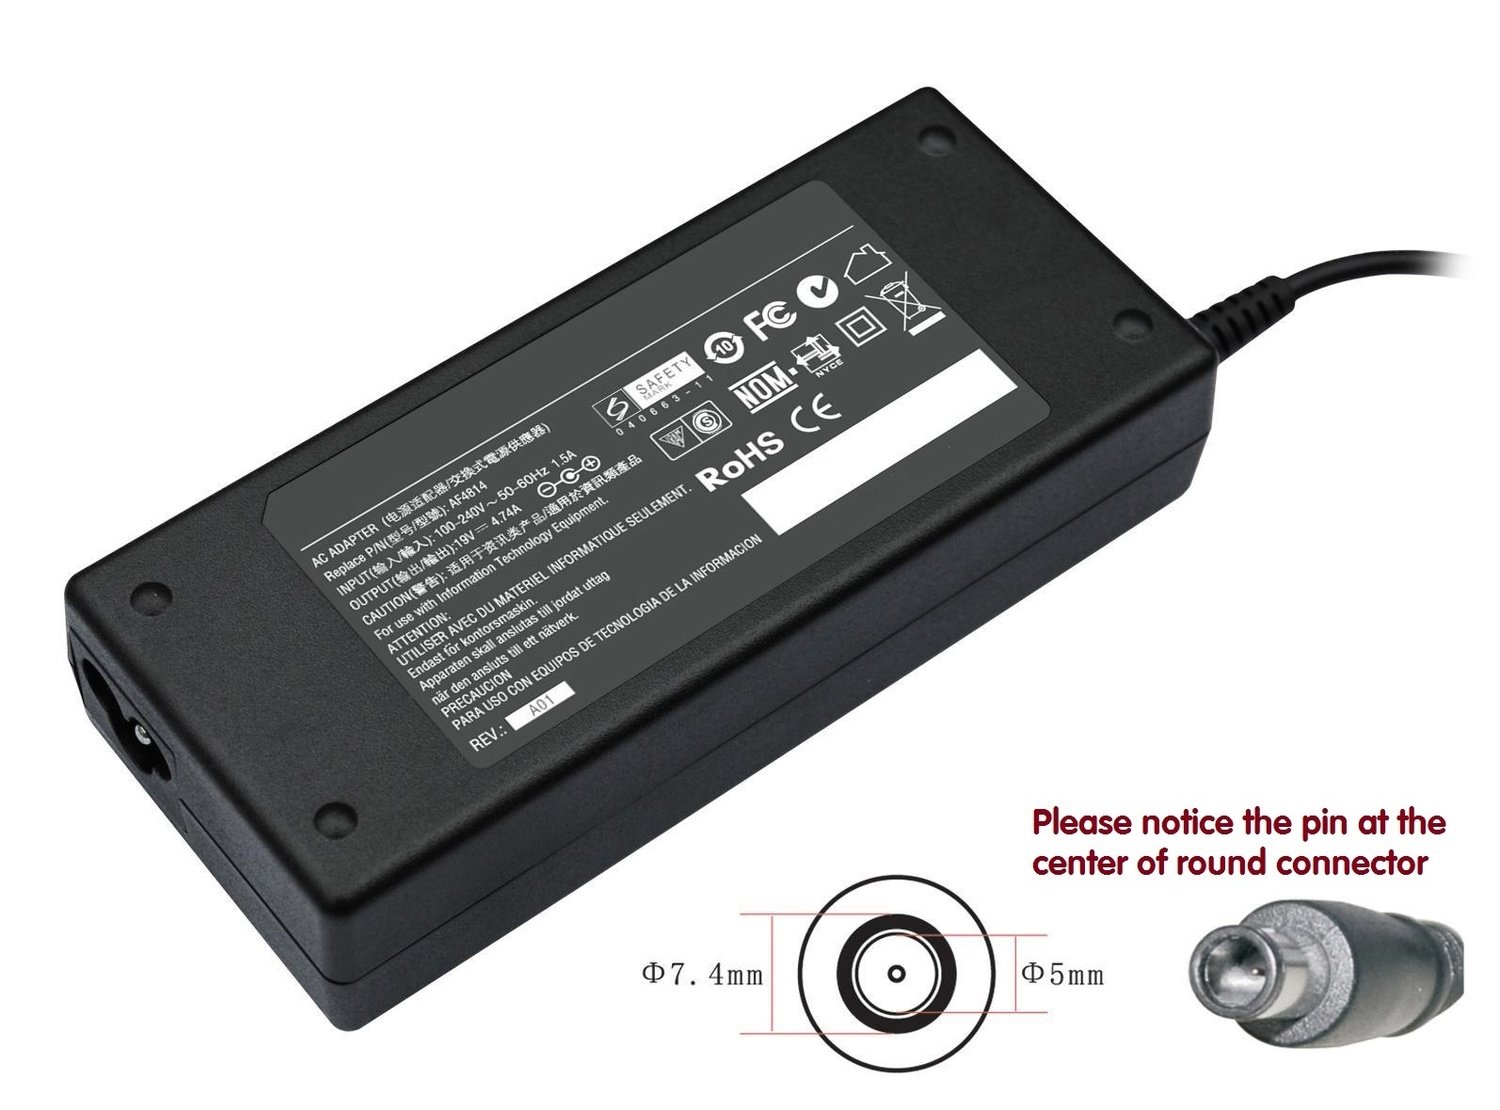 Dell Studio Xps16 Xps M1210 Xps M1310 Series Compatible laptop charger / ac power adaptor